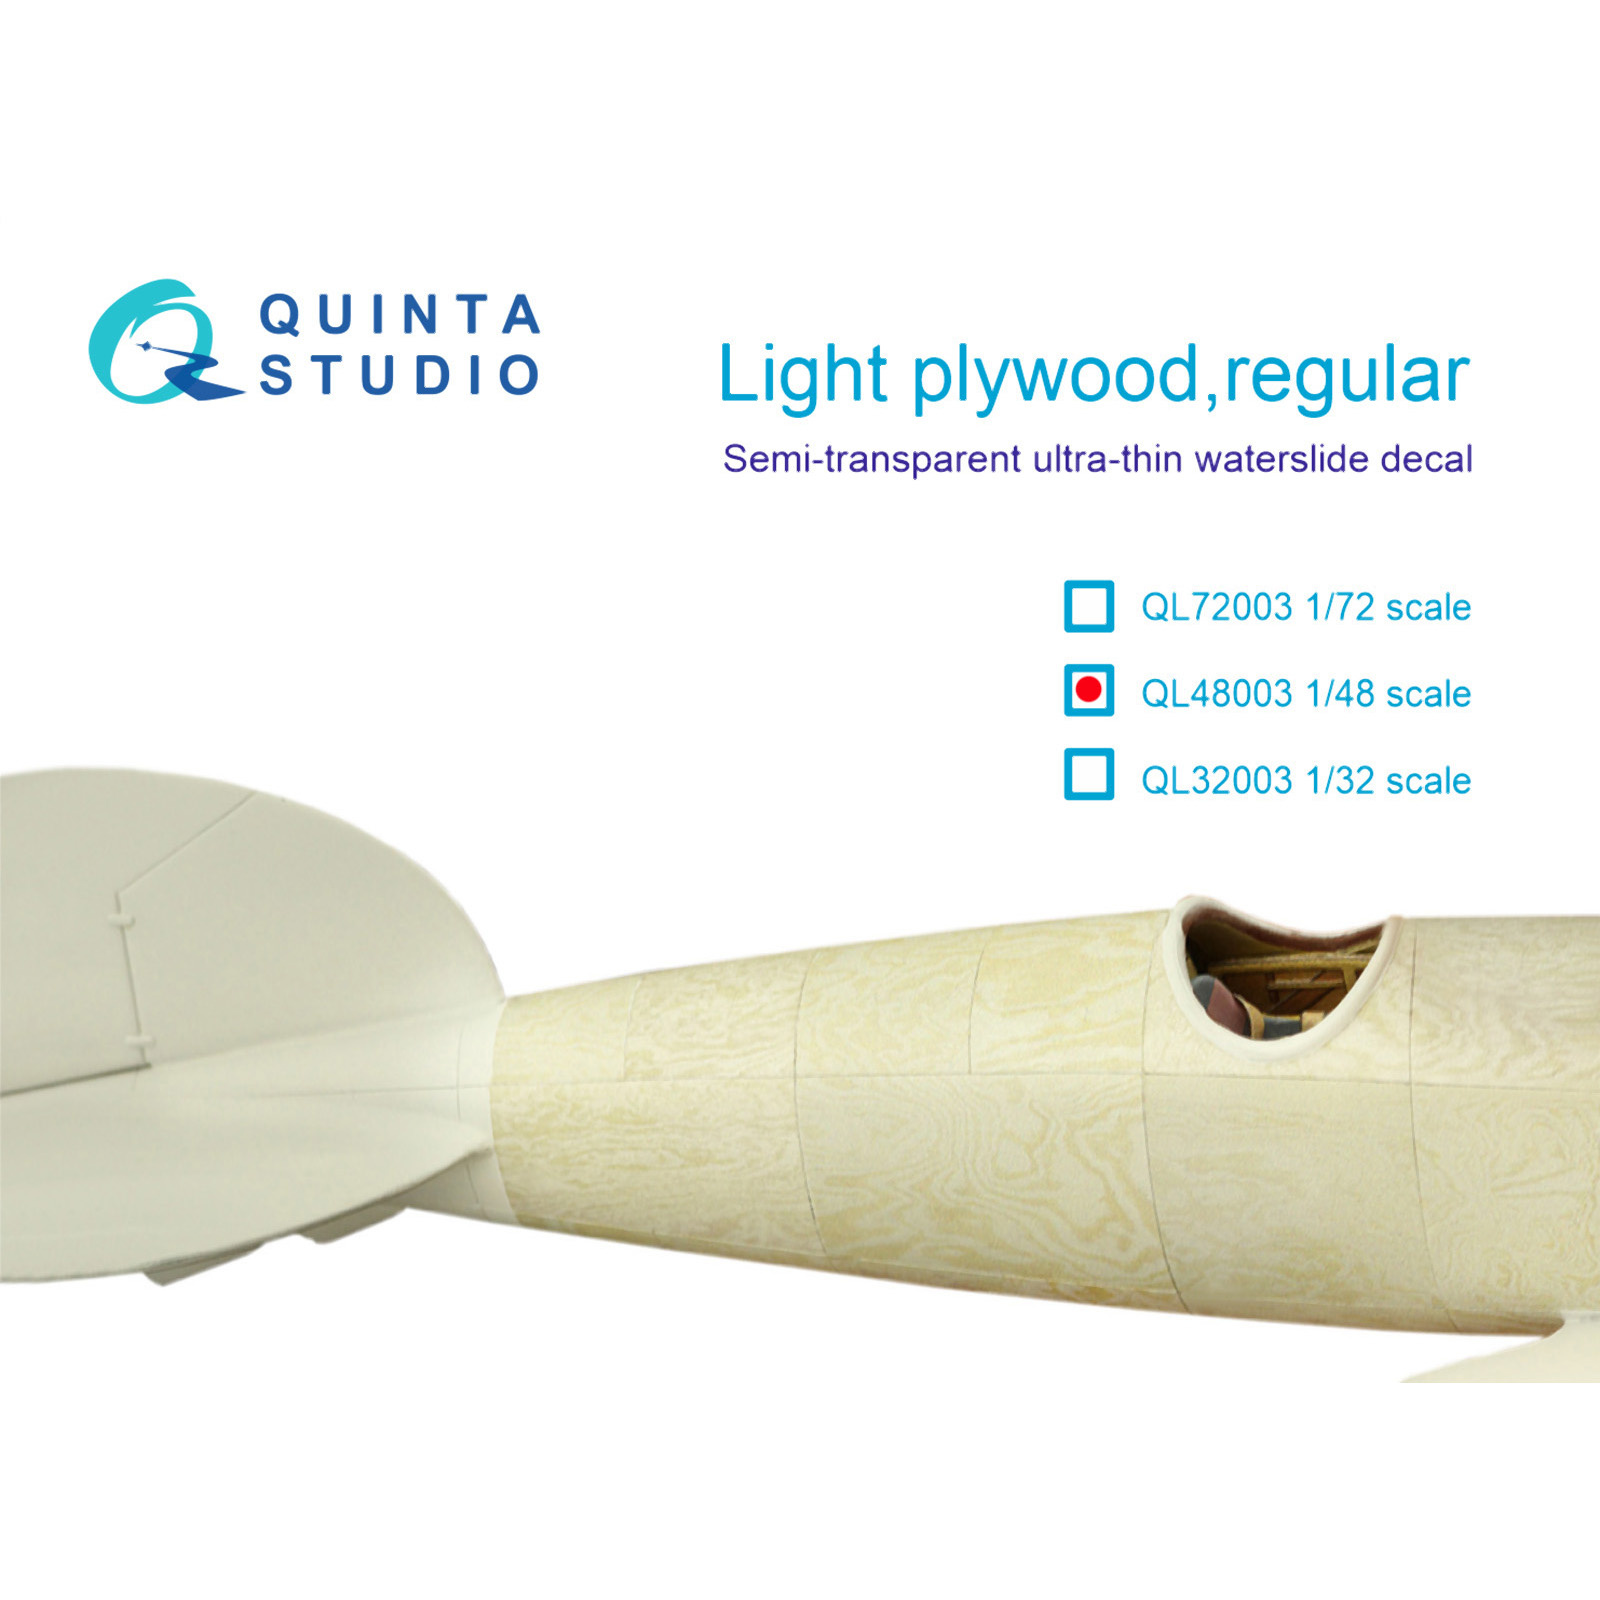 QL48003 Quinta Studio 1/48 Light plywood, plain